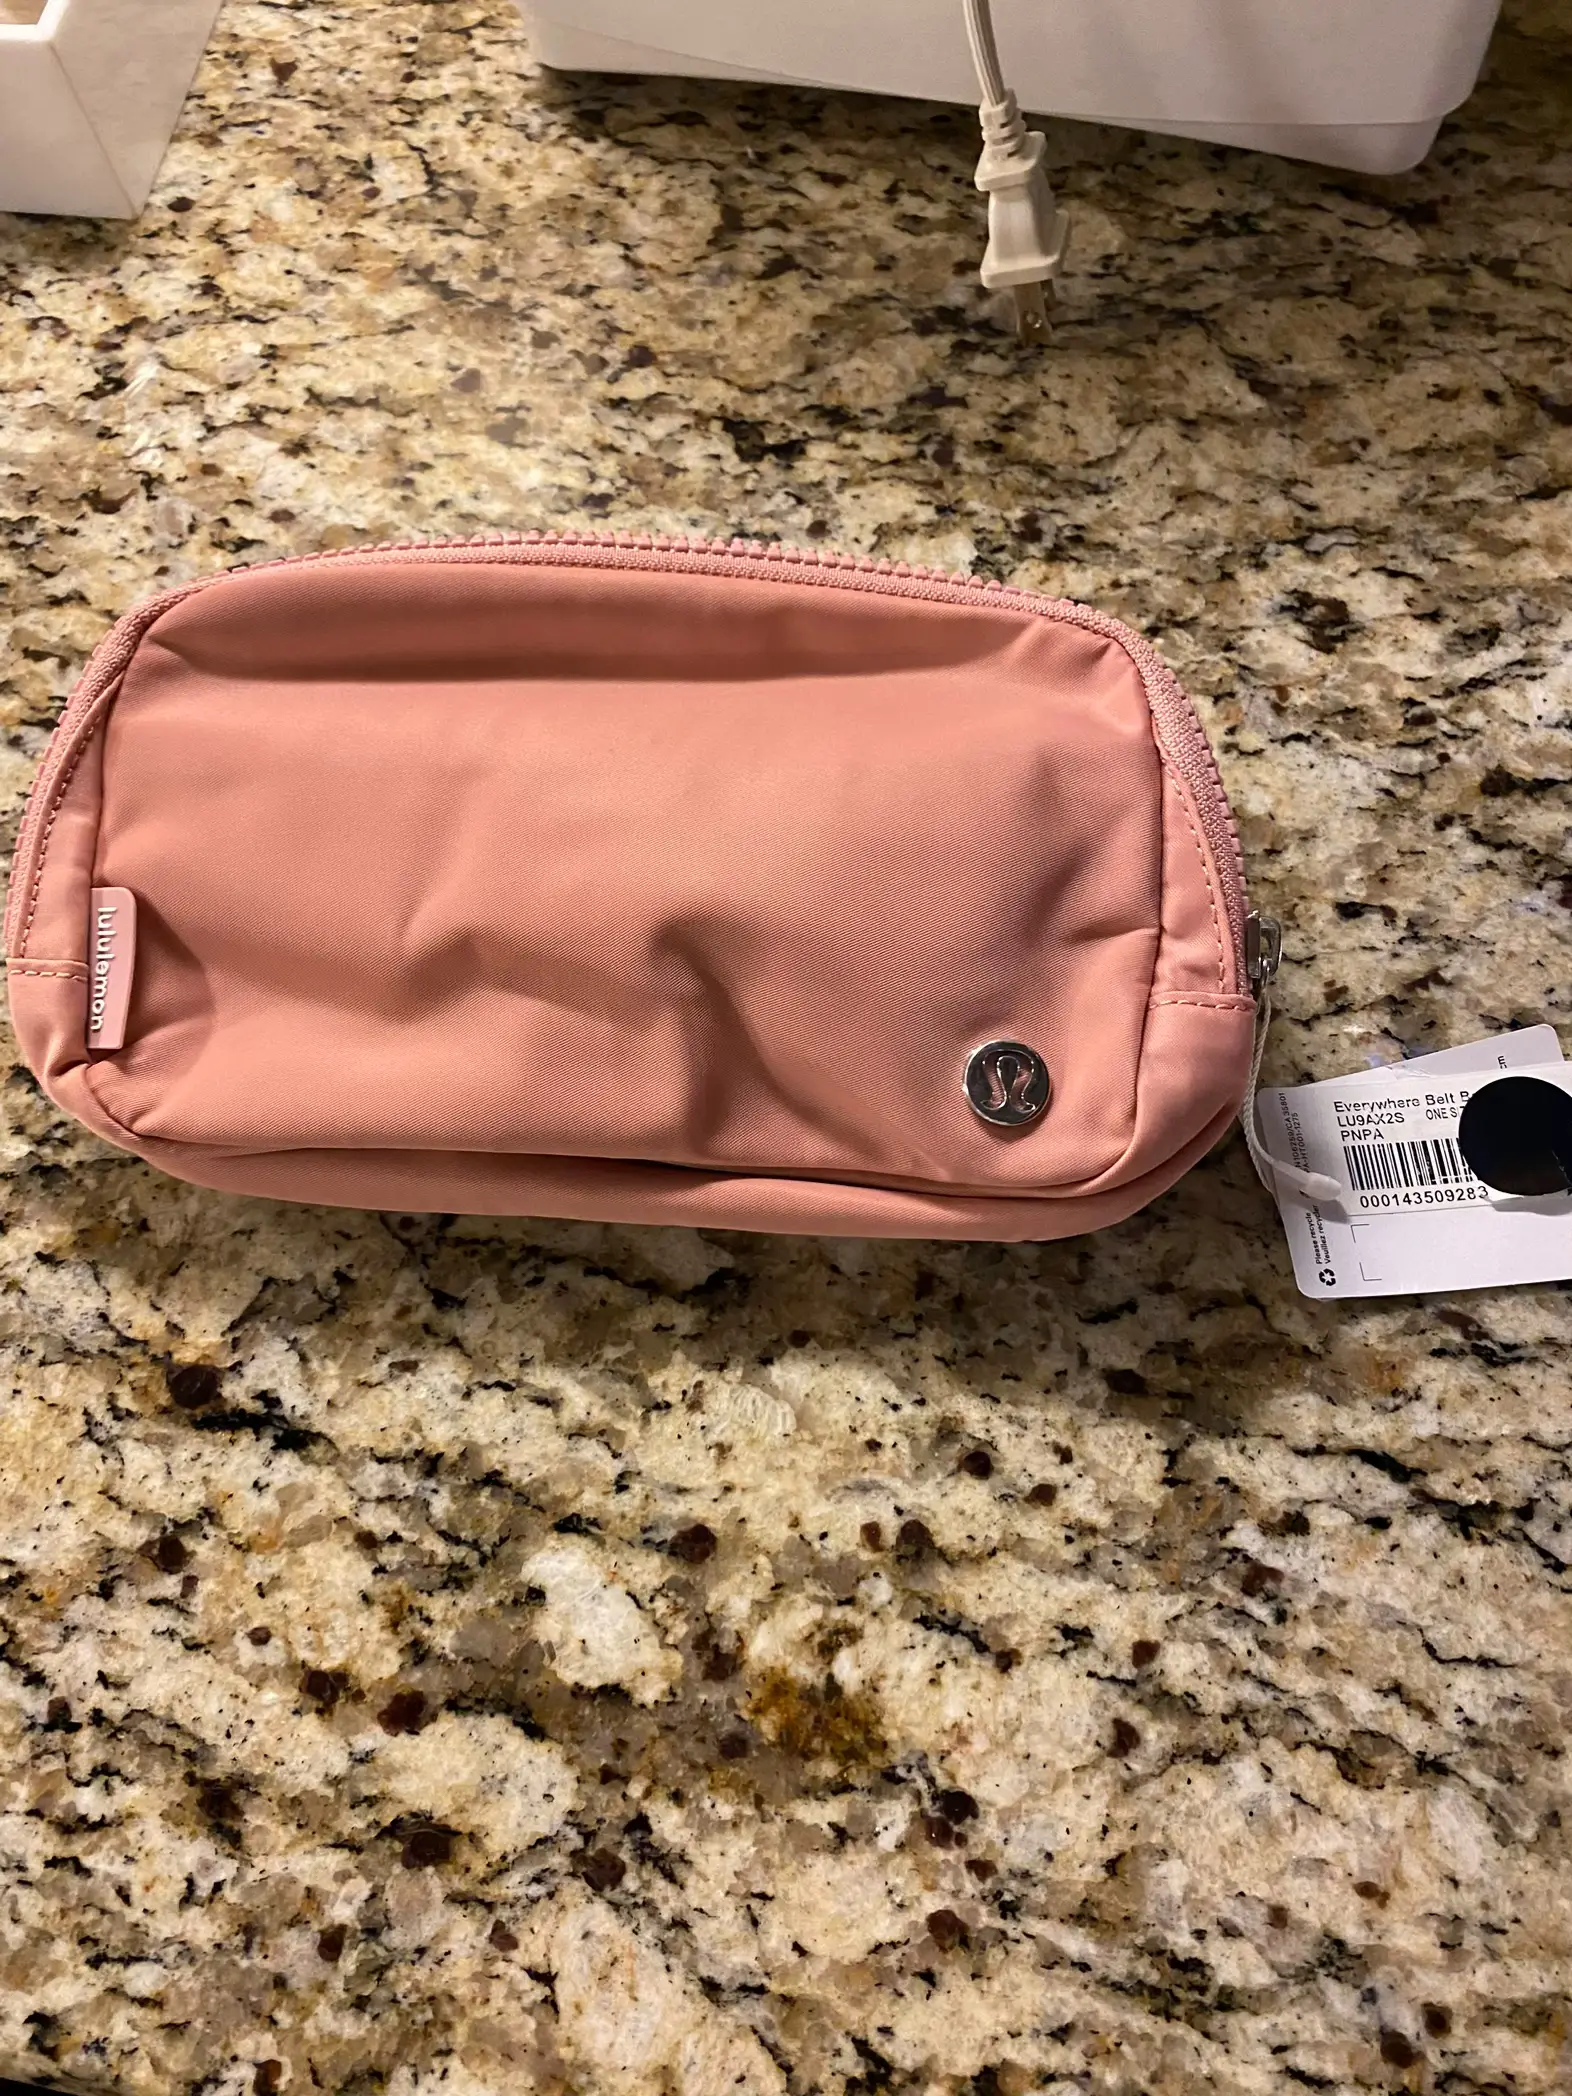 How To Spot A Fake Lululemon Belt Bag: 6 Ways